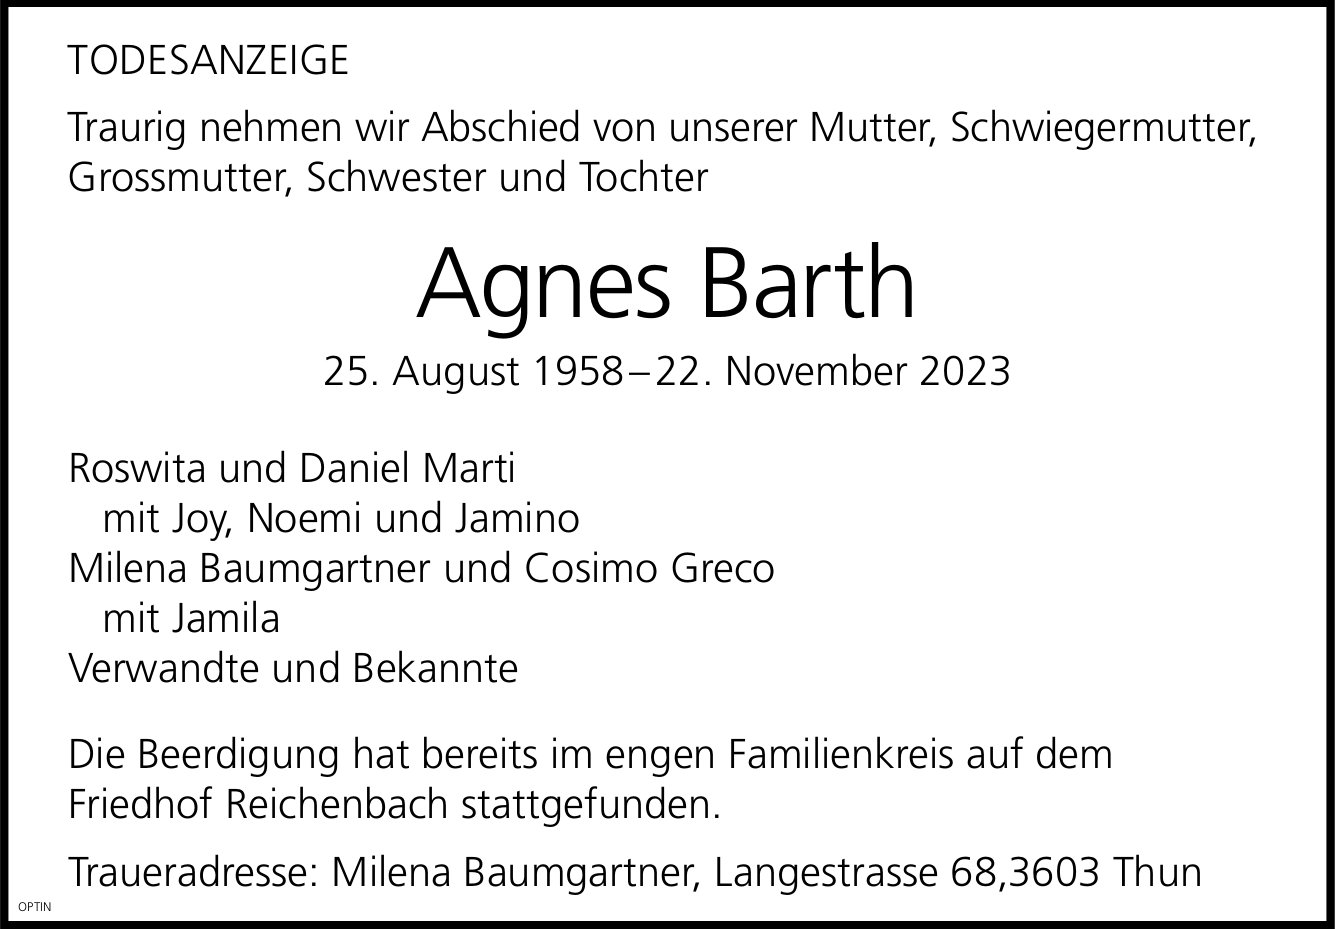 Agnes Barth, November 2023 / TA